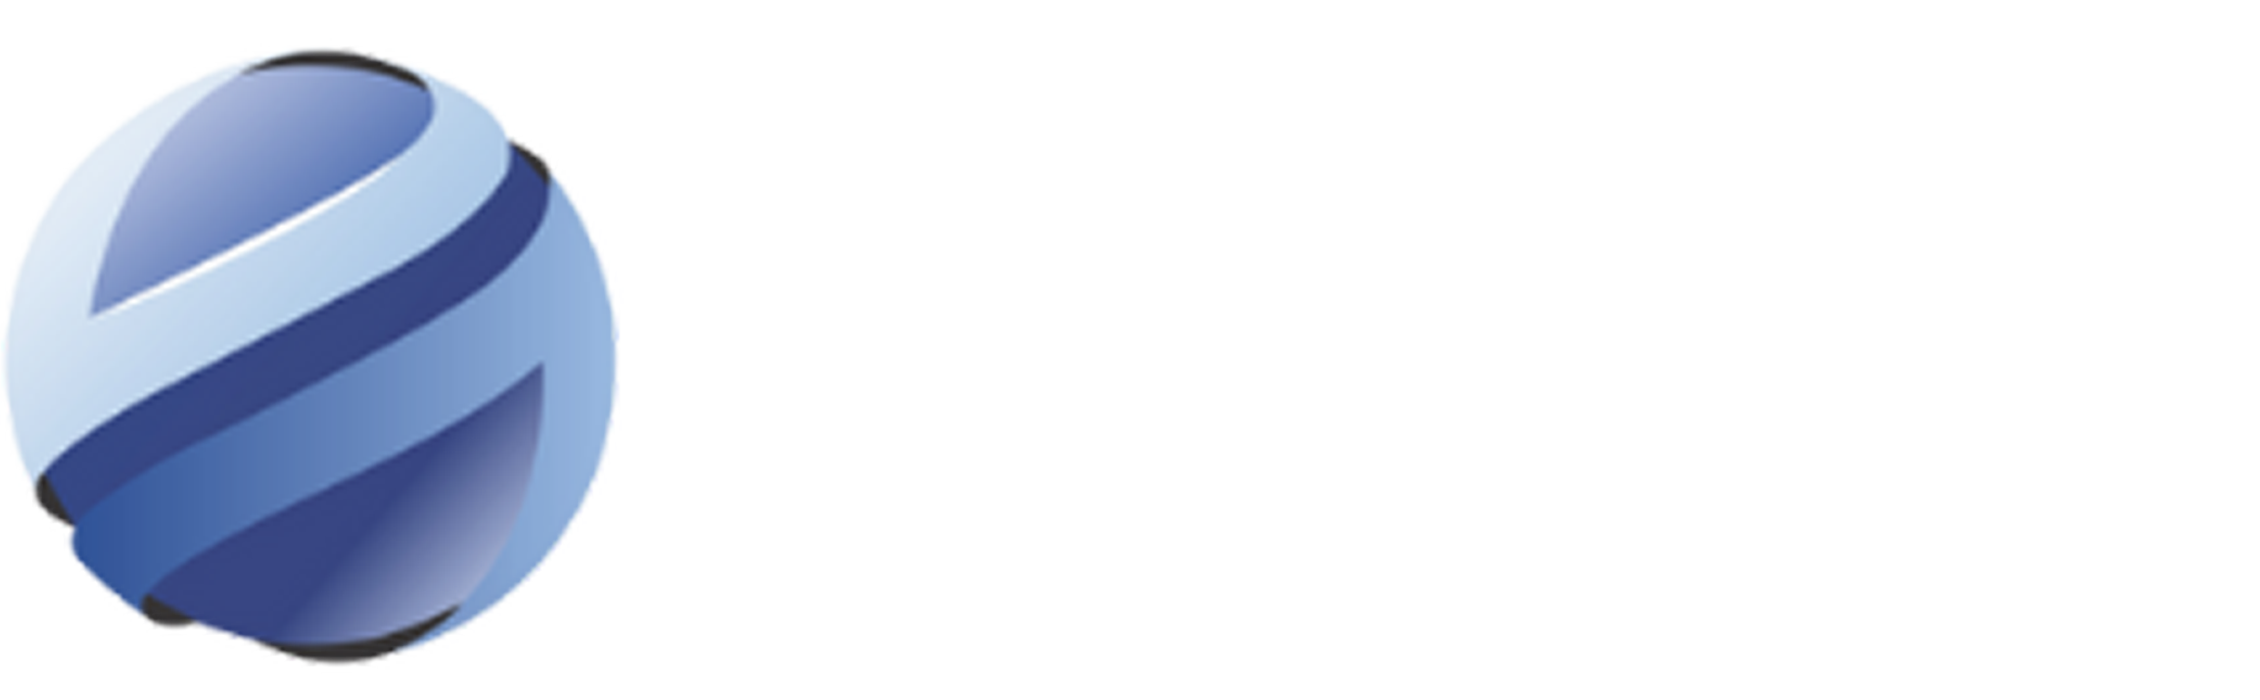 Correa, Porto